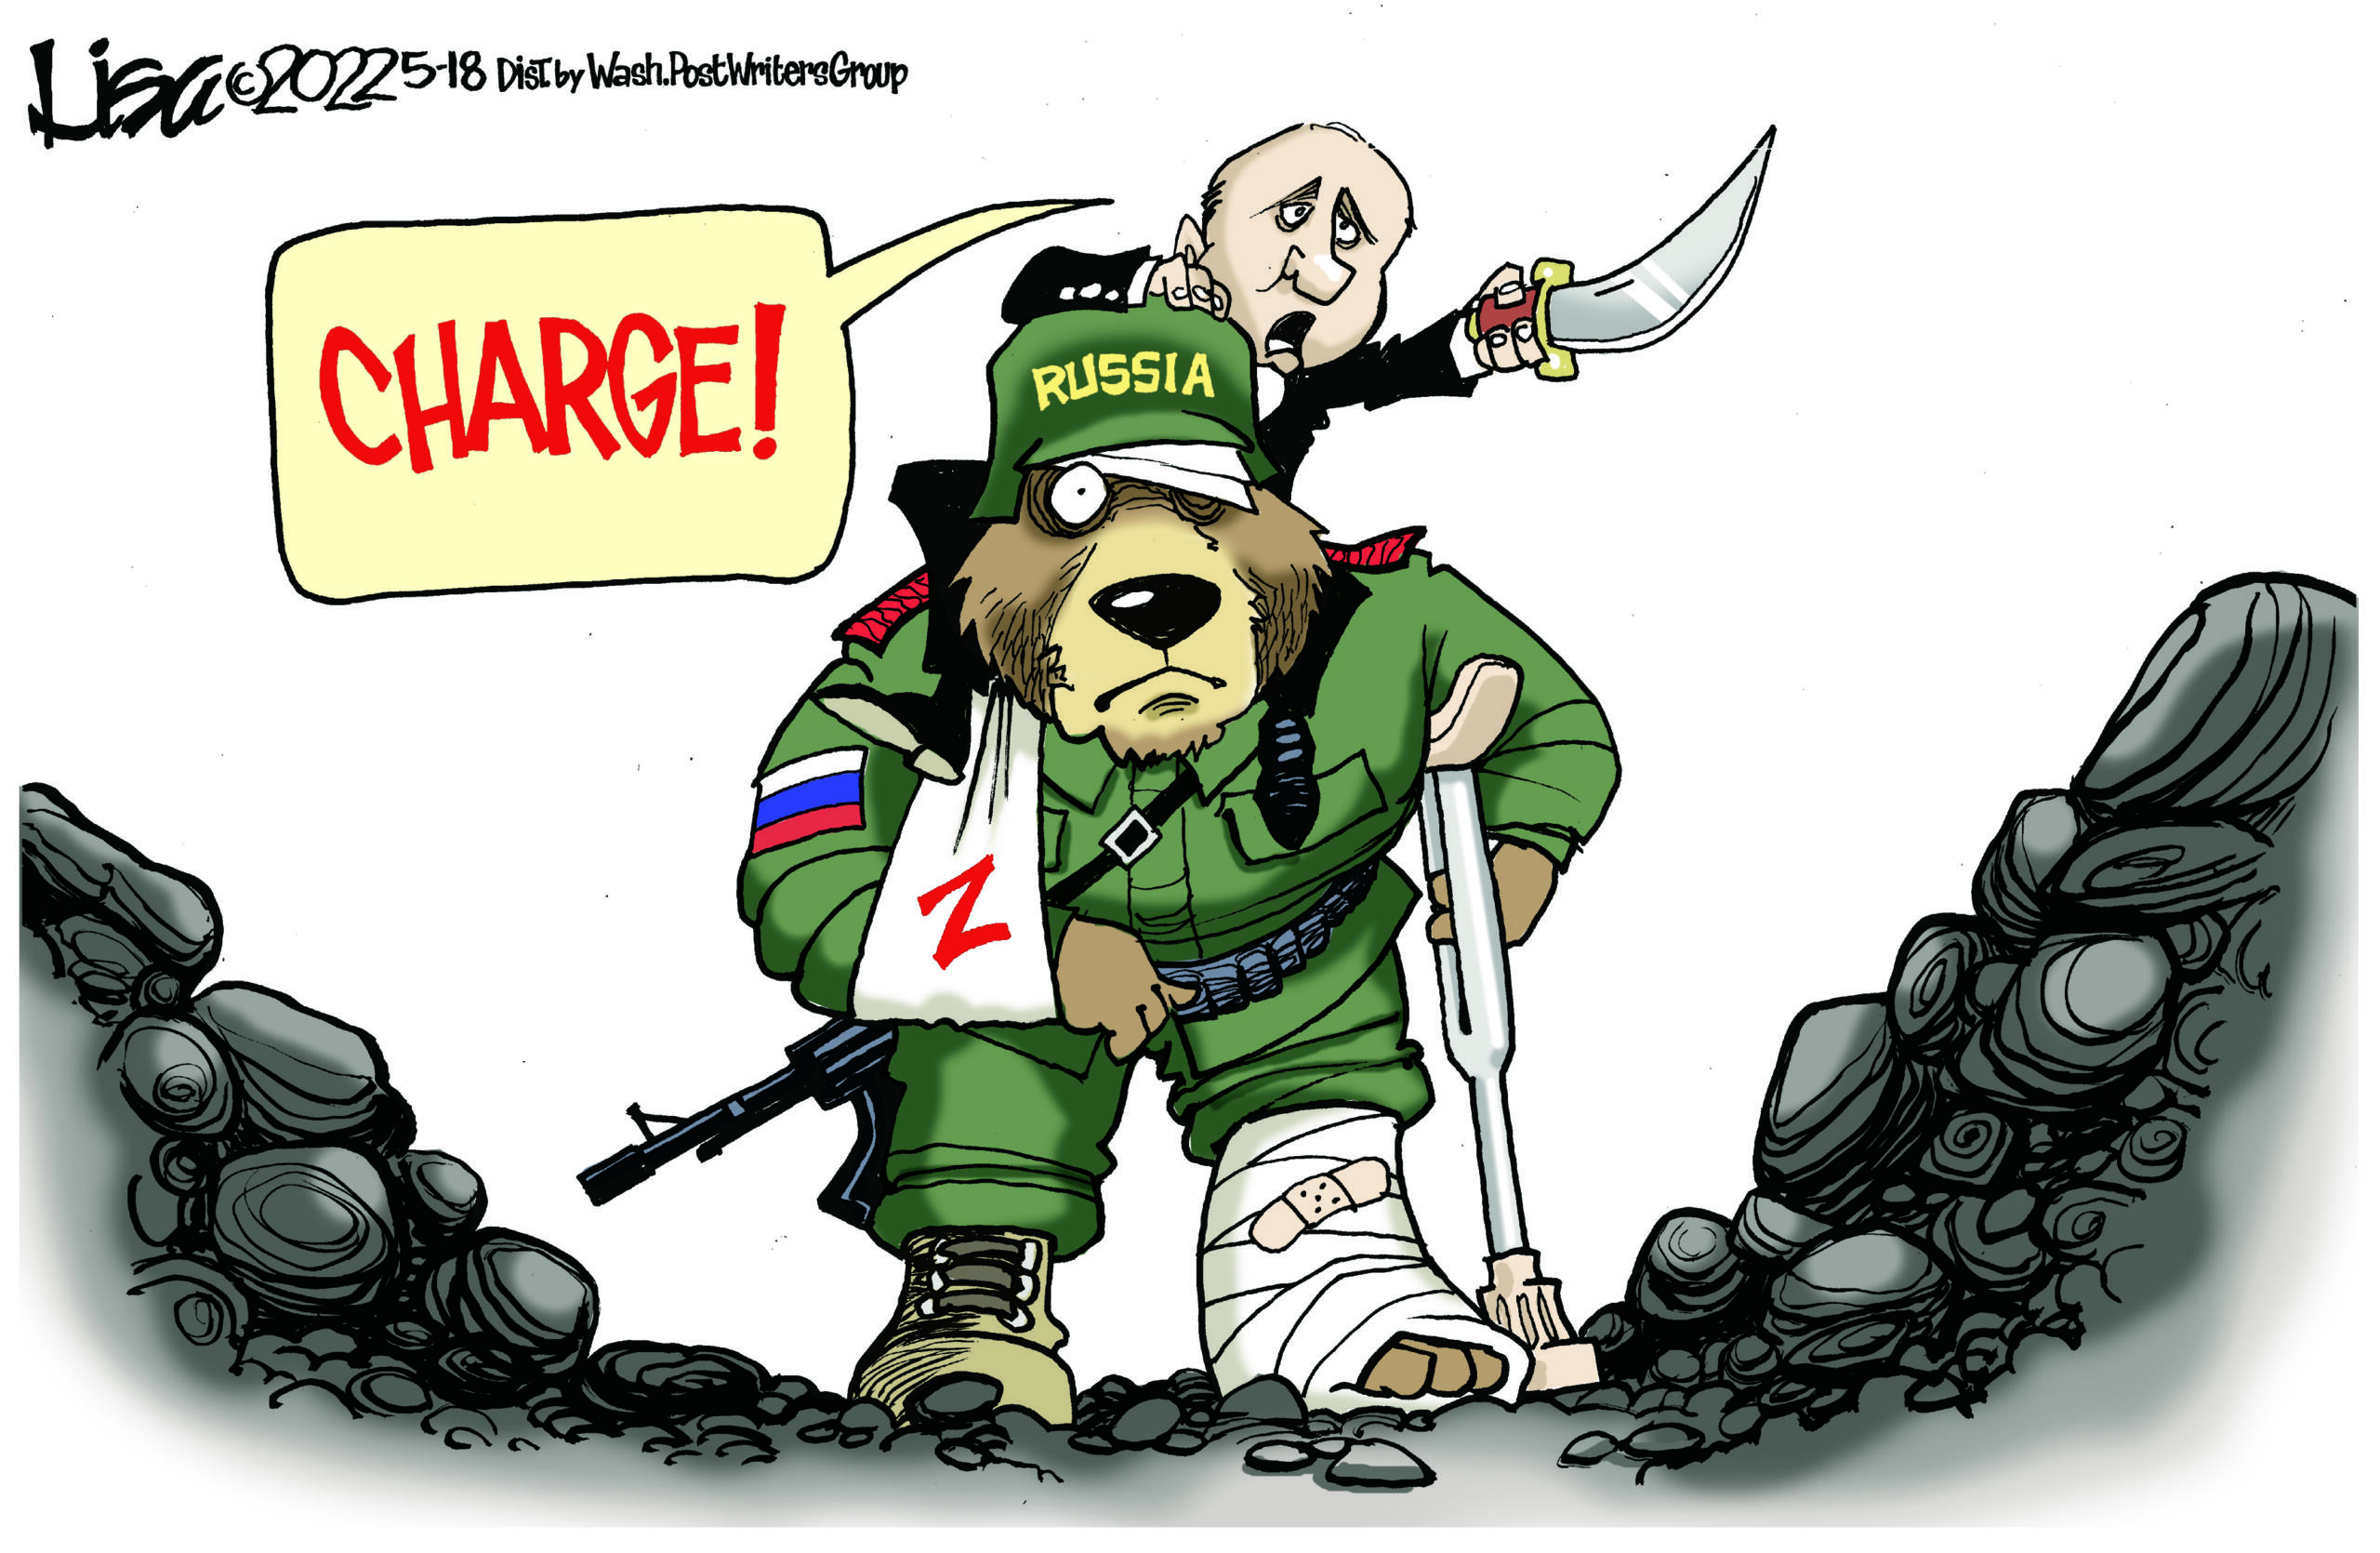 May 21: Putin's War